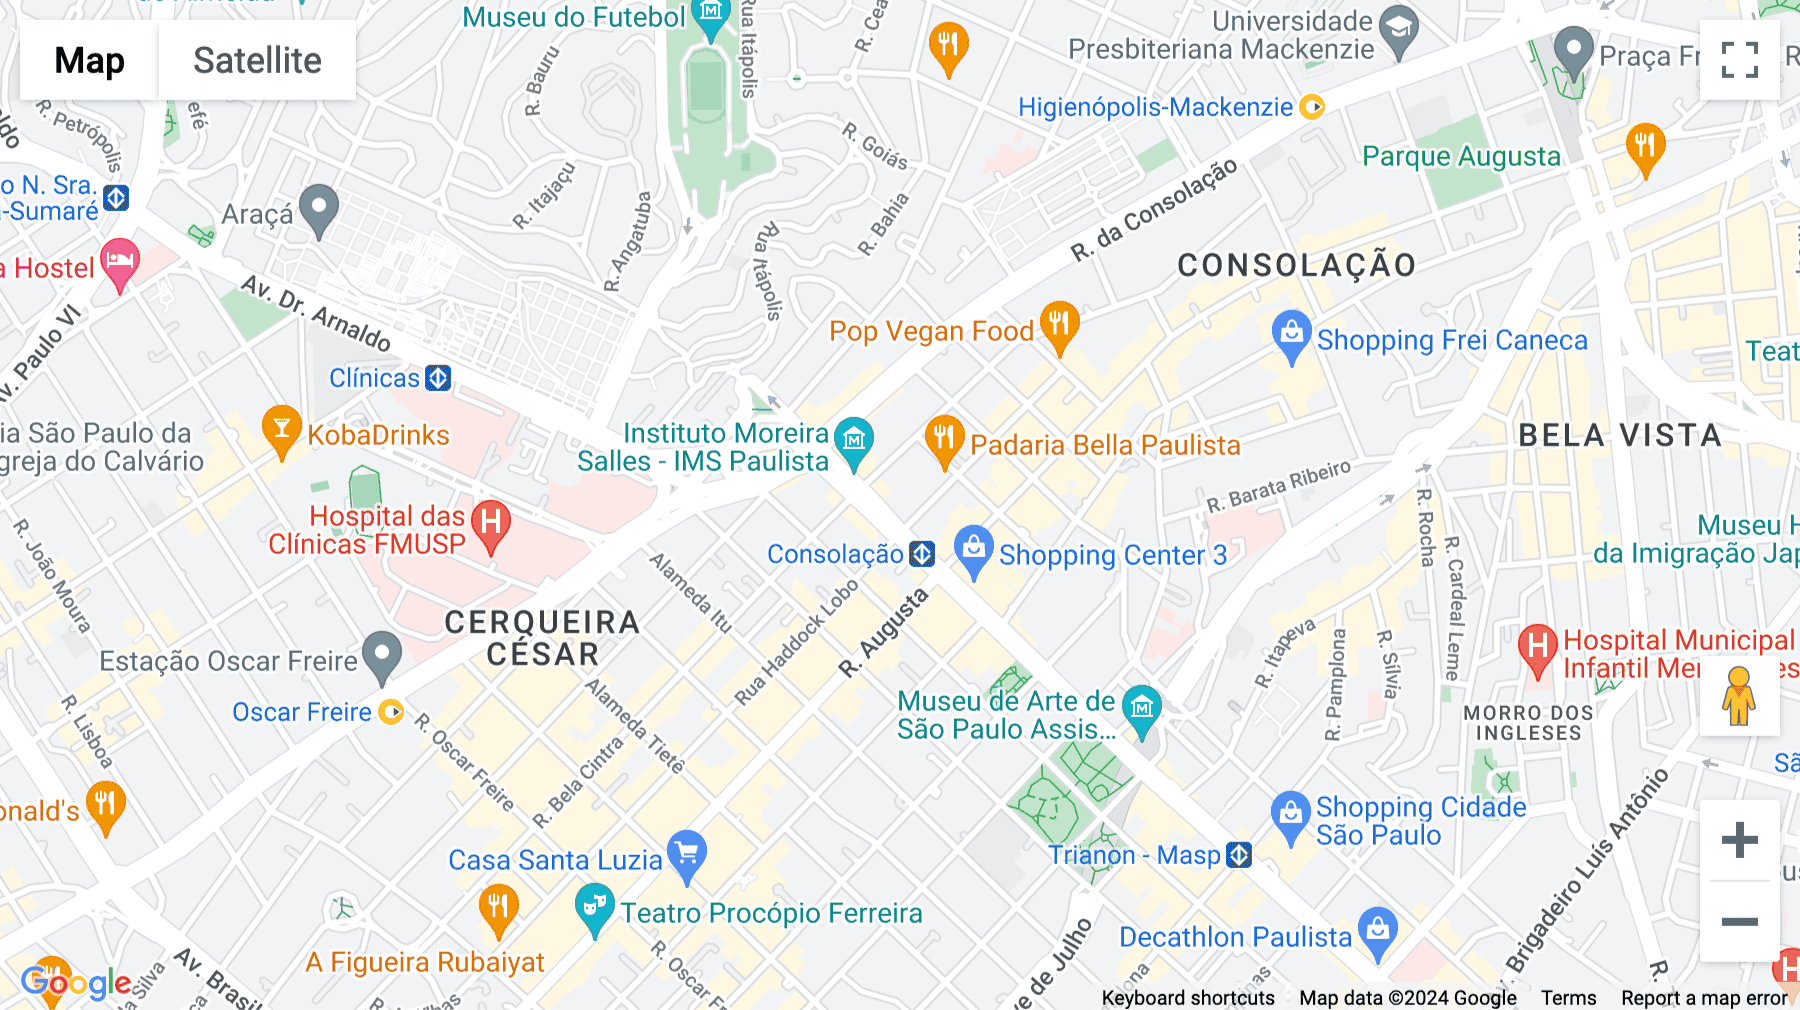 Click for interative map of Avenida Paulista 2.300, andar Pilotis, Sao Paulo, Brazil, Sao Paulo